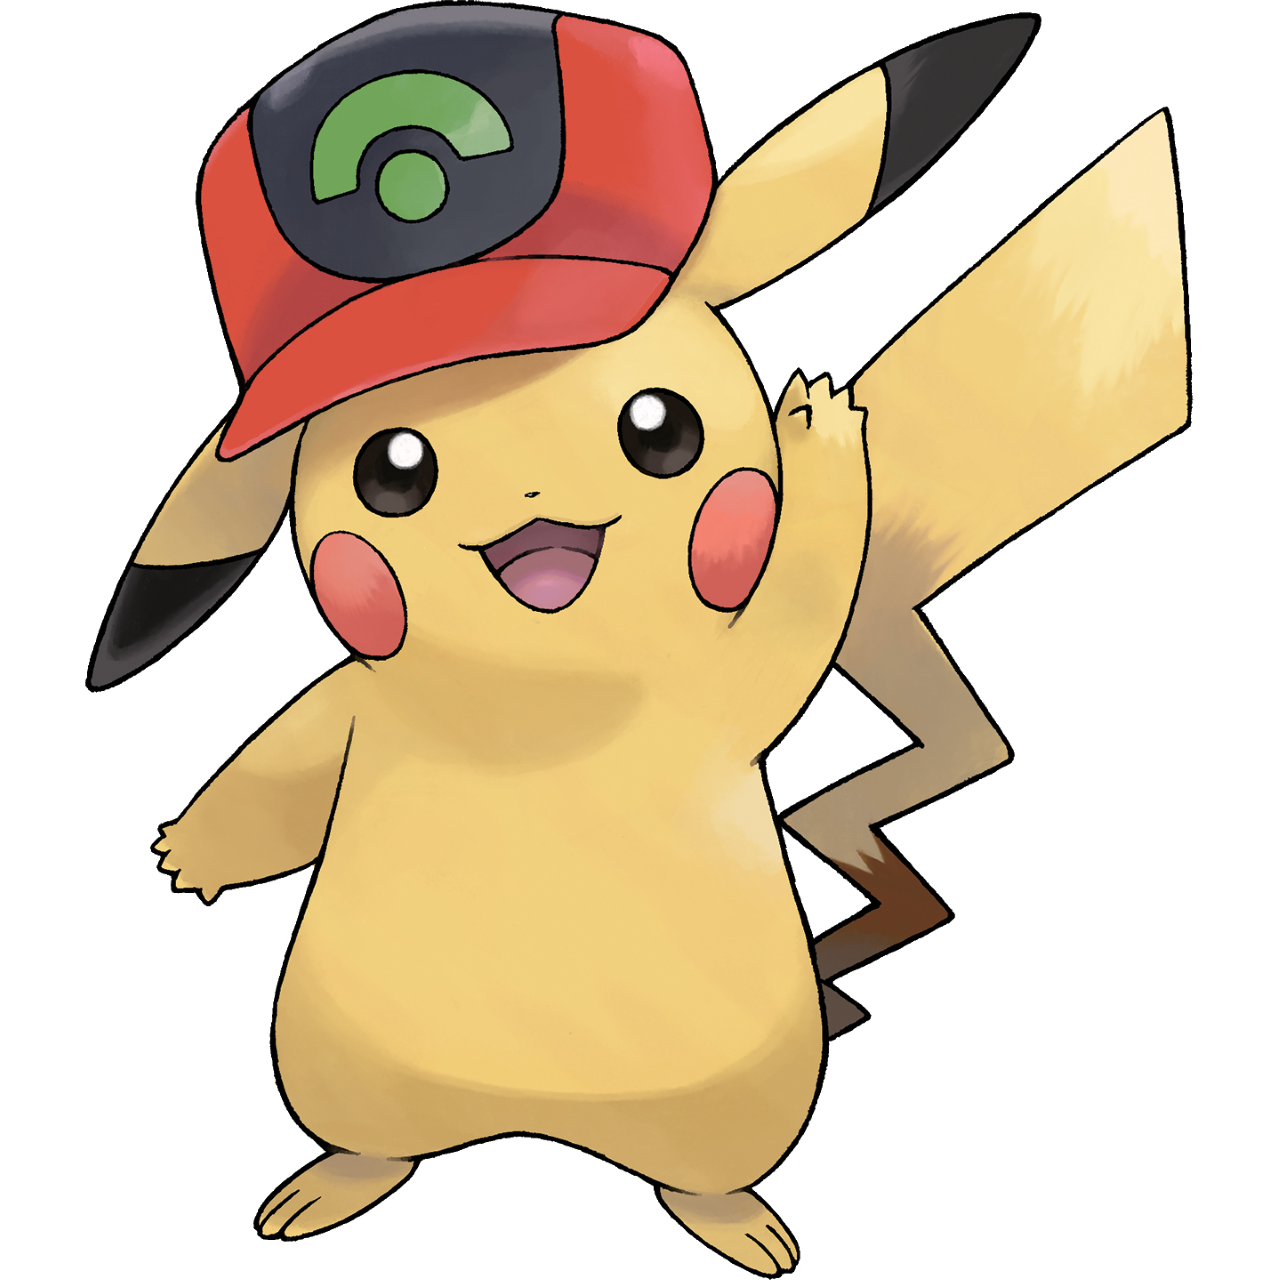 Pokemon pikachu with hat